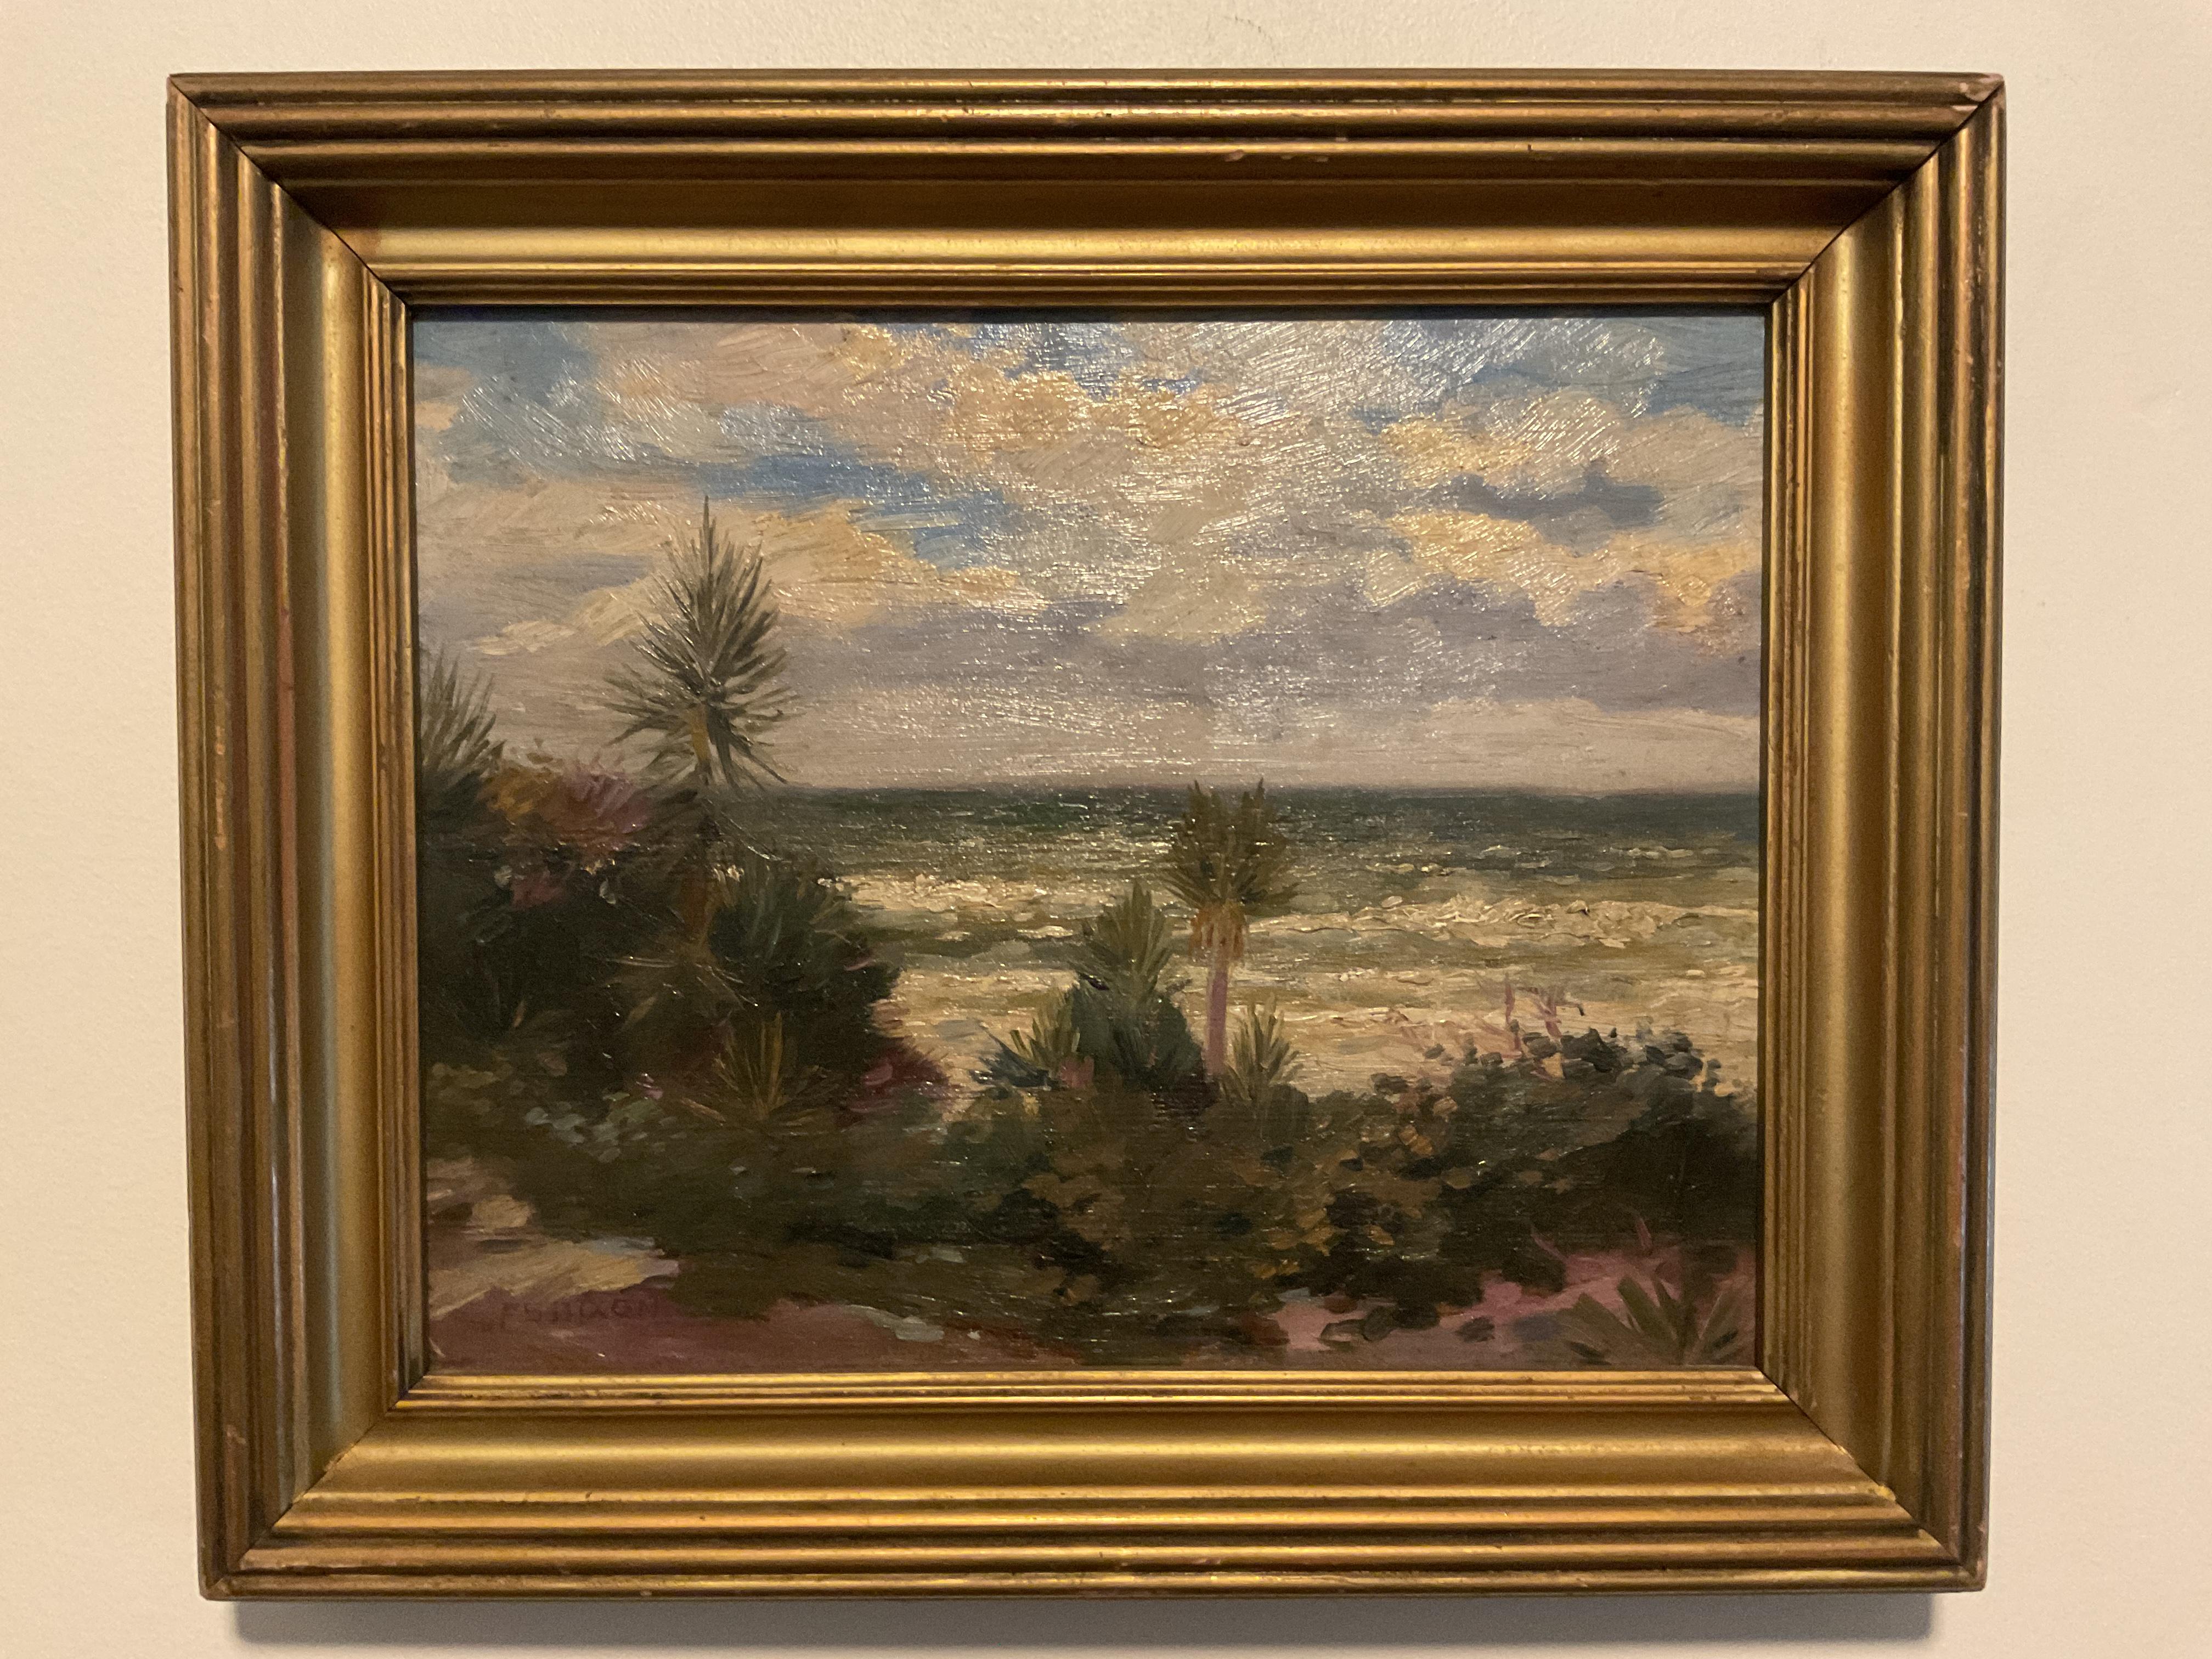 Francis Stillwell Dixon Landscape Painting – Charming Tropical Beach Ölgemälde von aufgeführten Künstler Francis D. Dixon ca 1920's